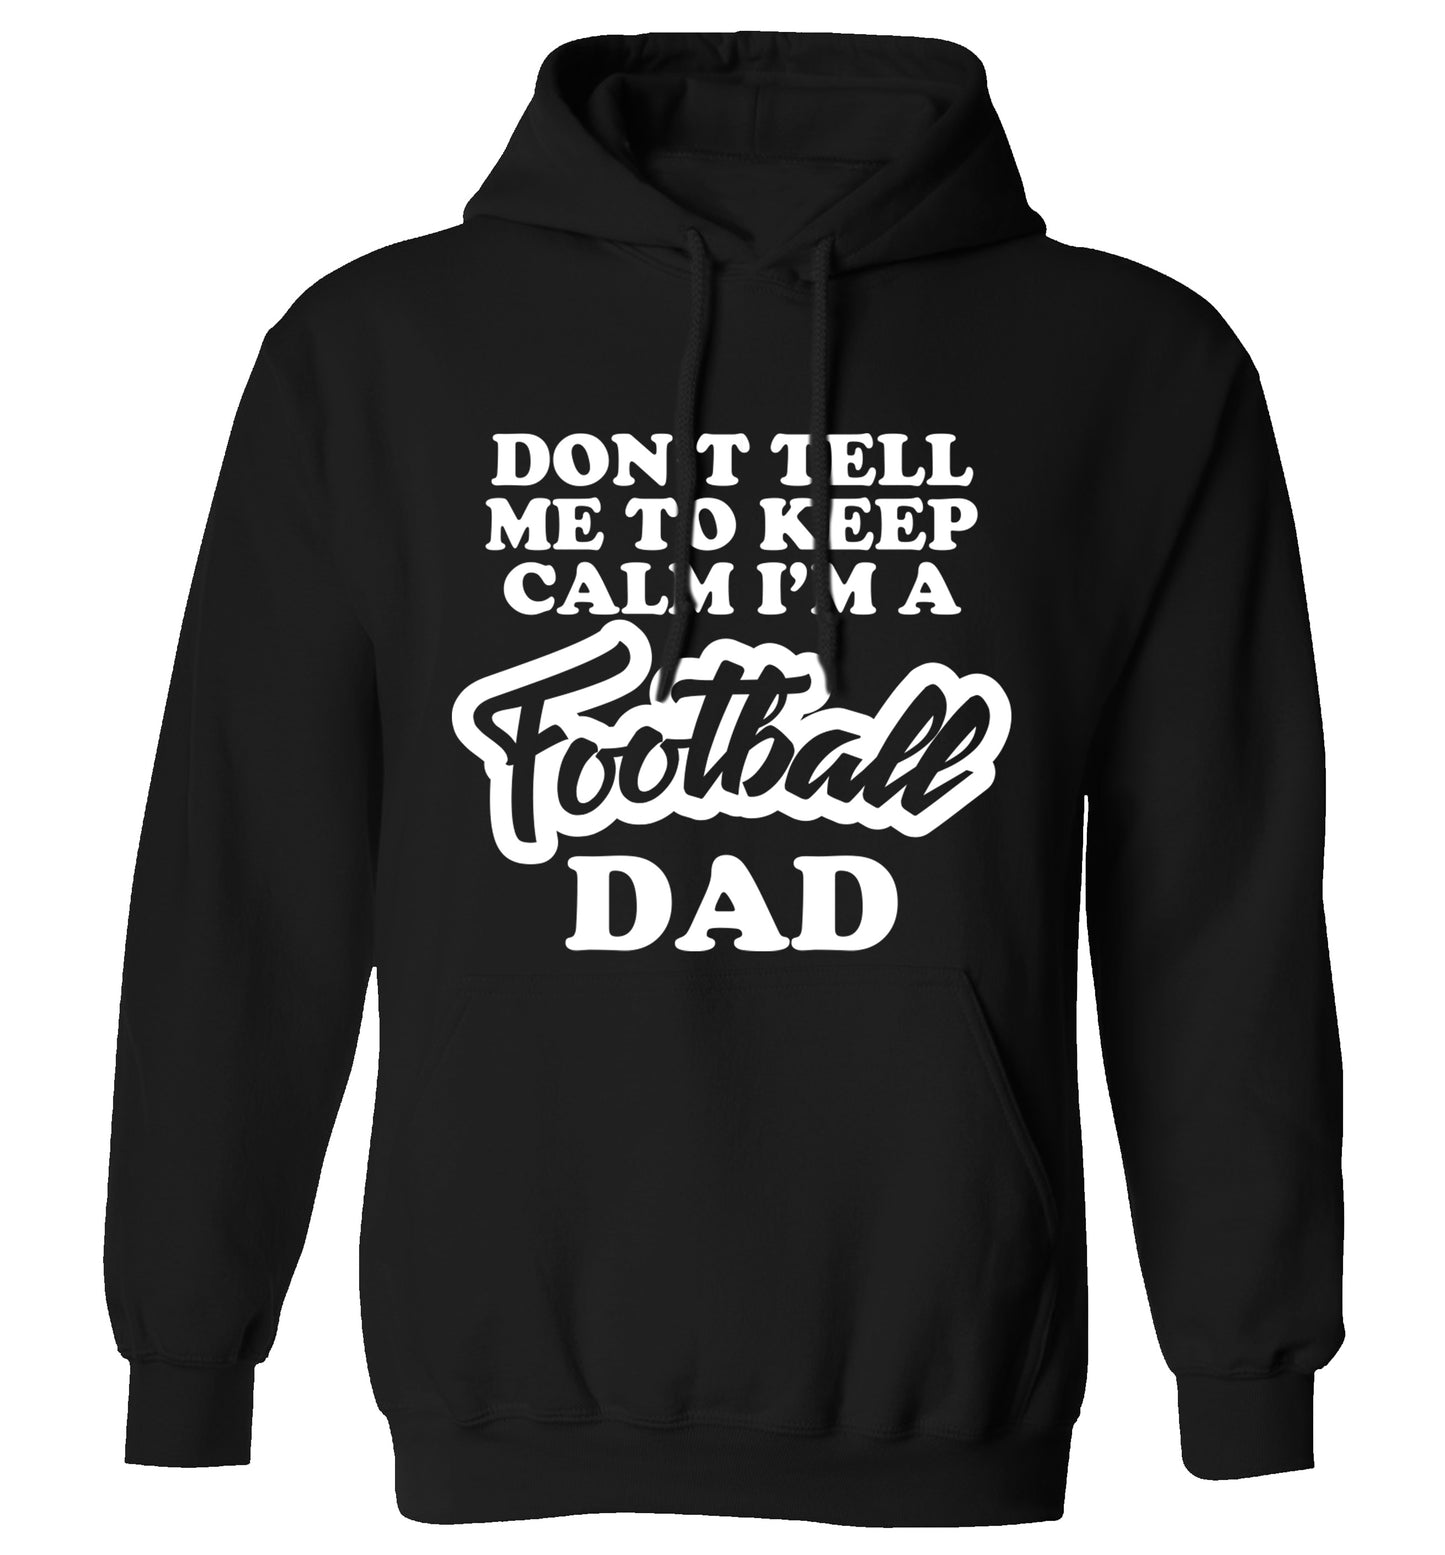 Don't tell me to keep calm I'm a football grandad adults unisexblack hoodie 2XL